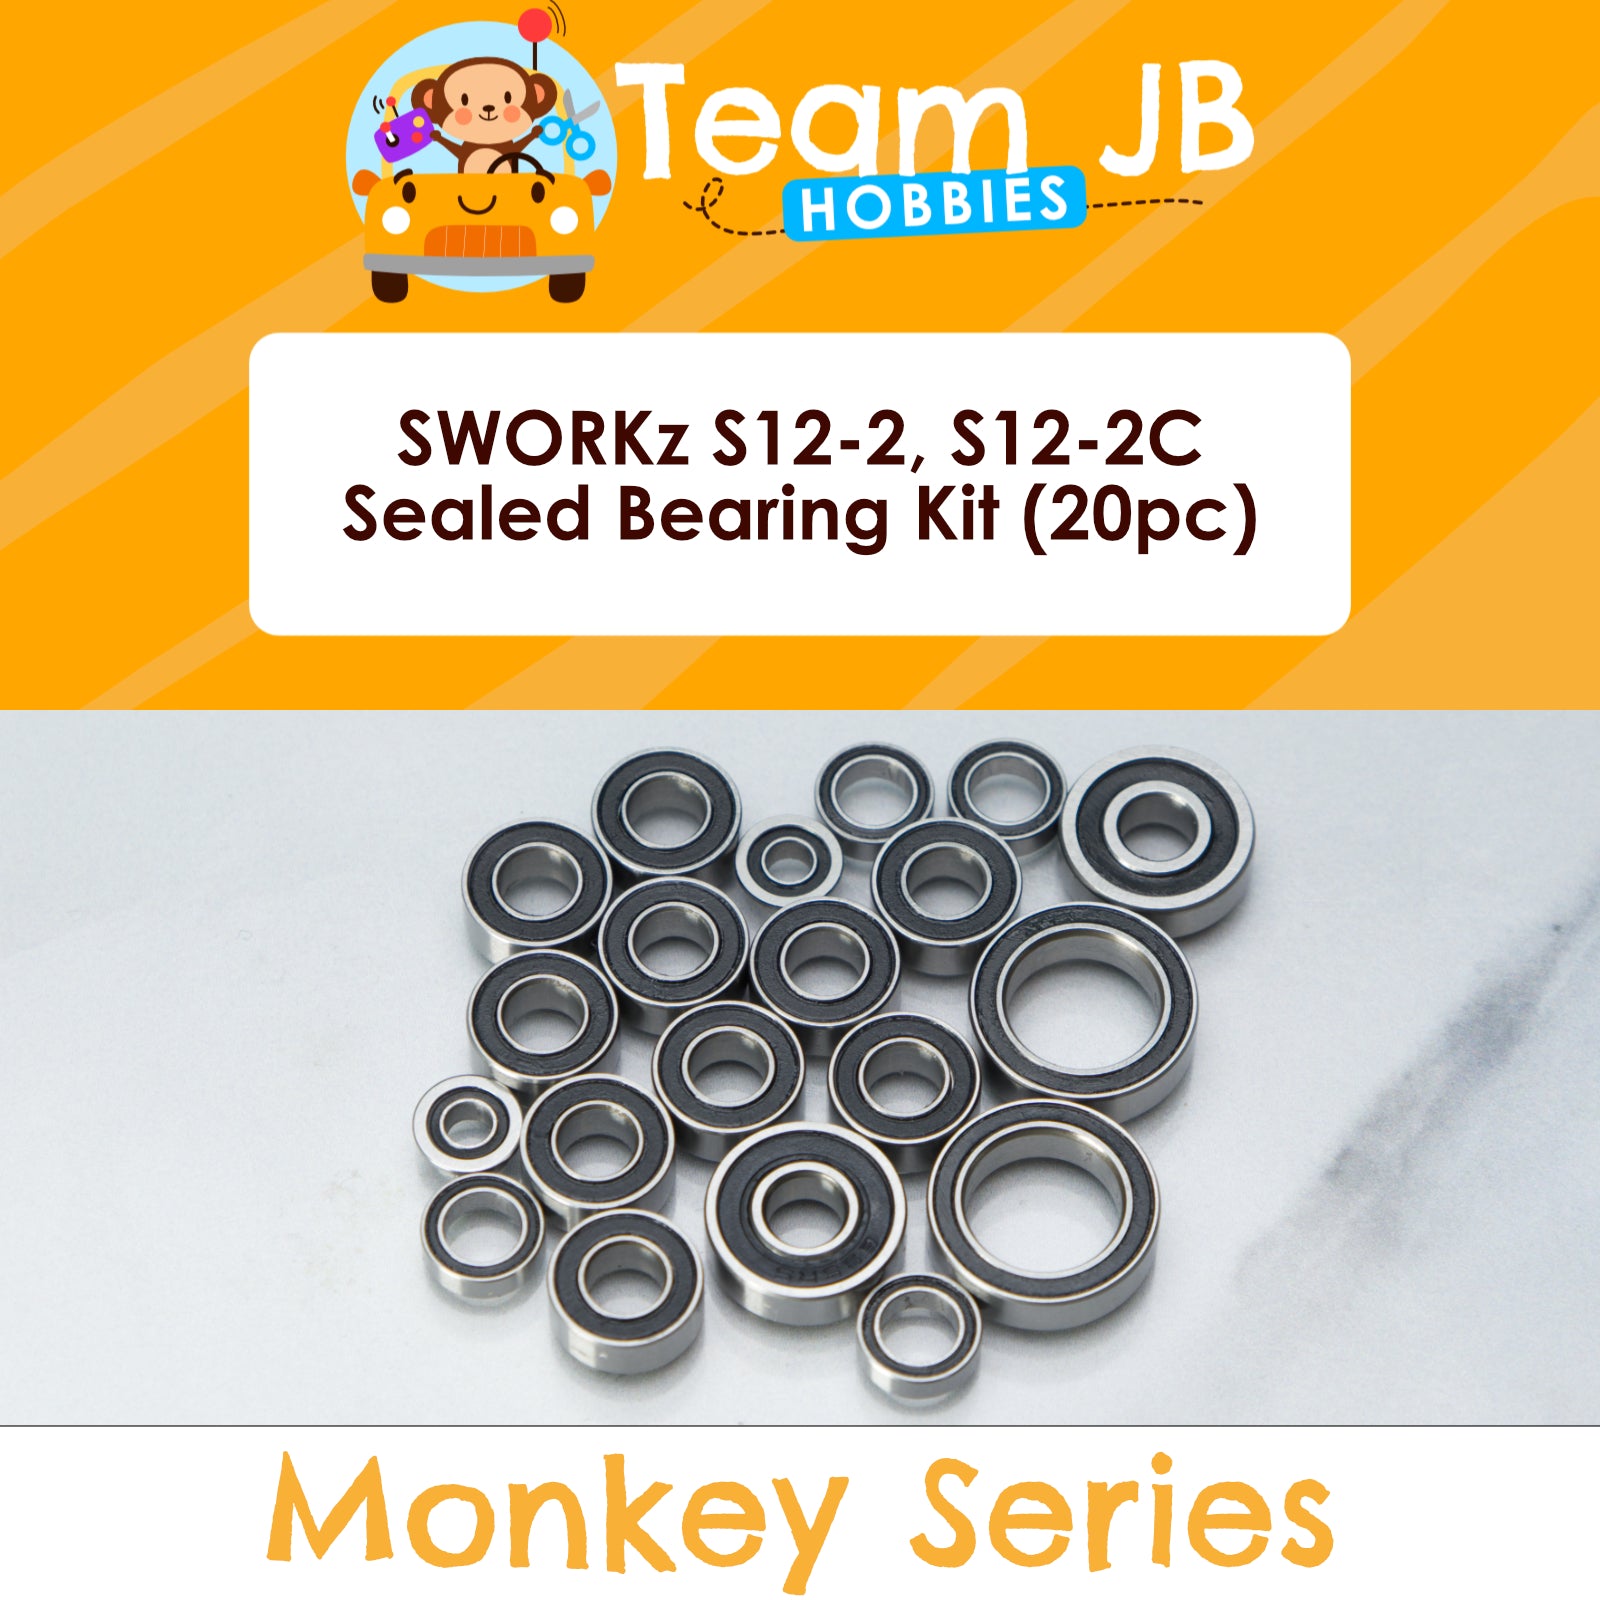 SWORKz S12-2, S12-2C - Sealed Bearing Kit